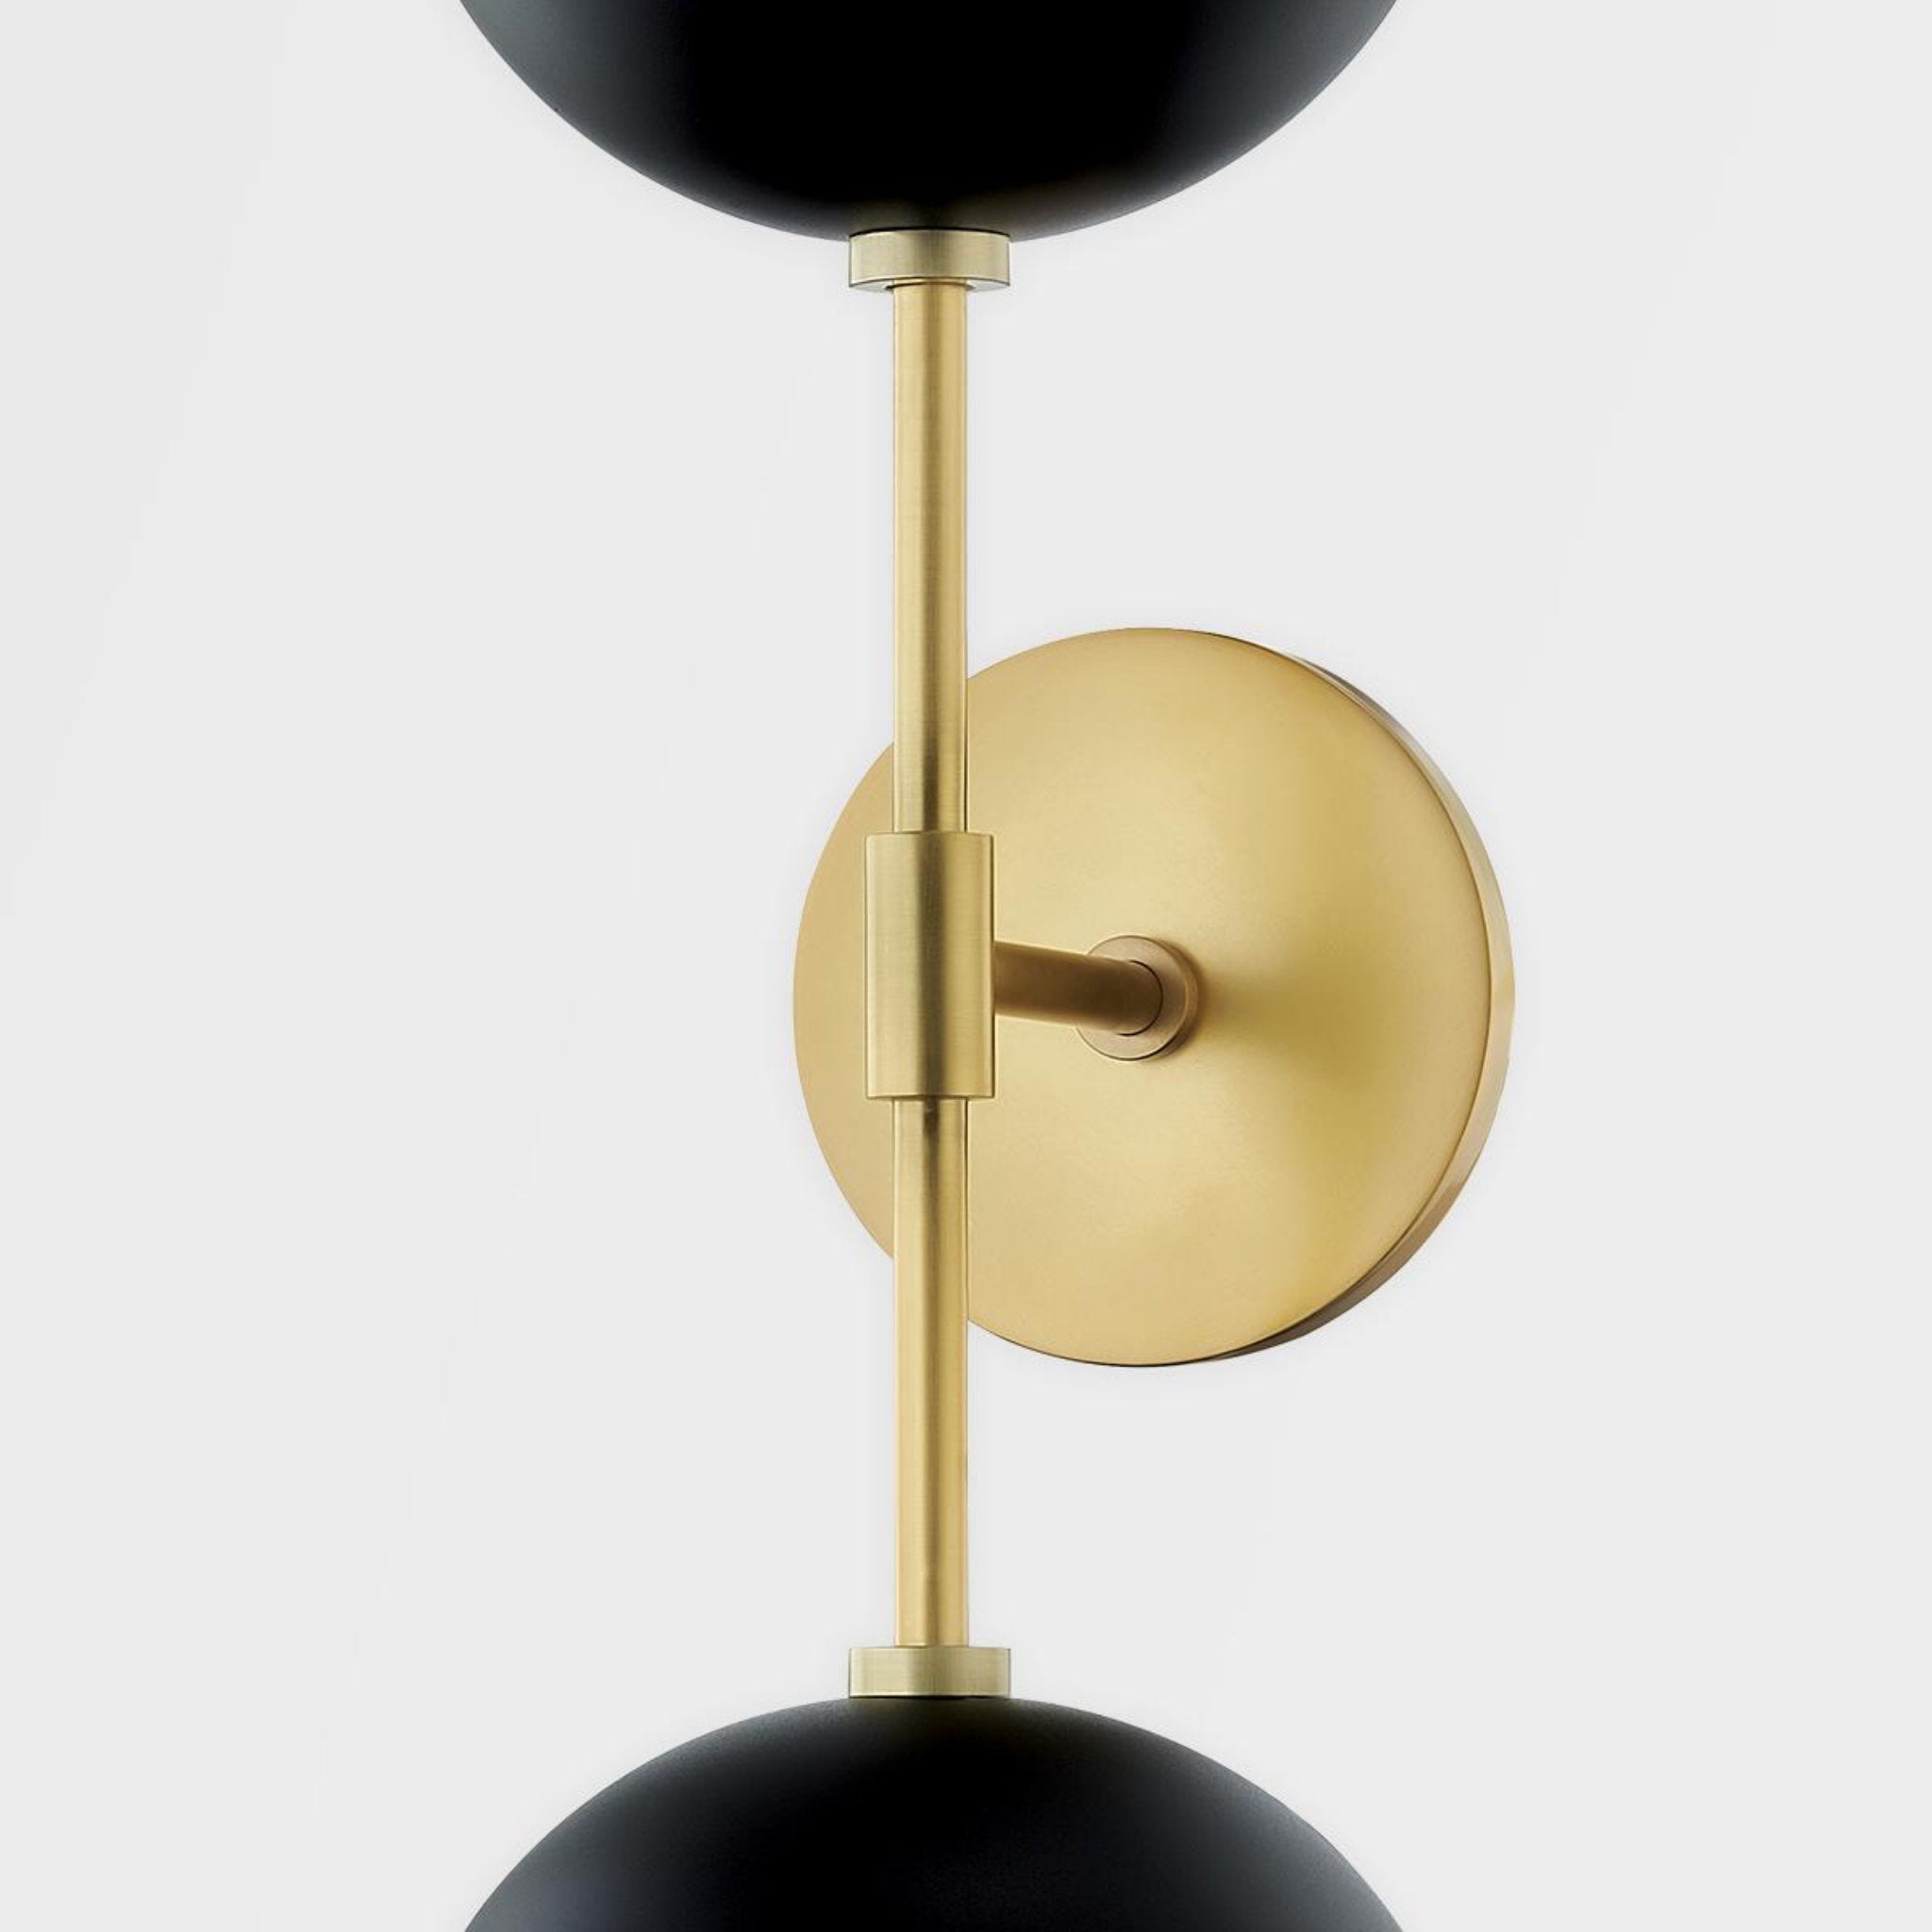 Renee 1-Light Plug-in Sconce in Aged Brass/Black